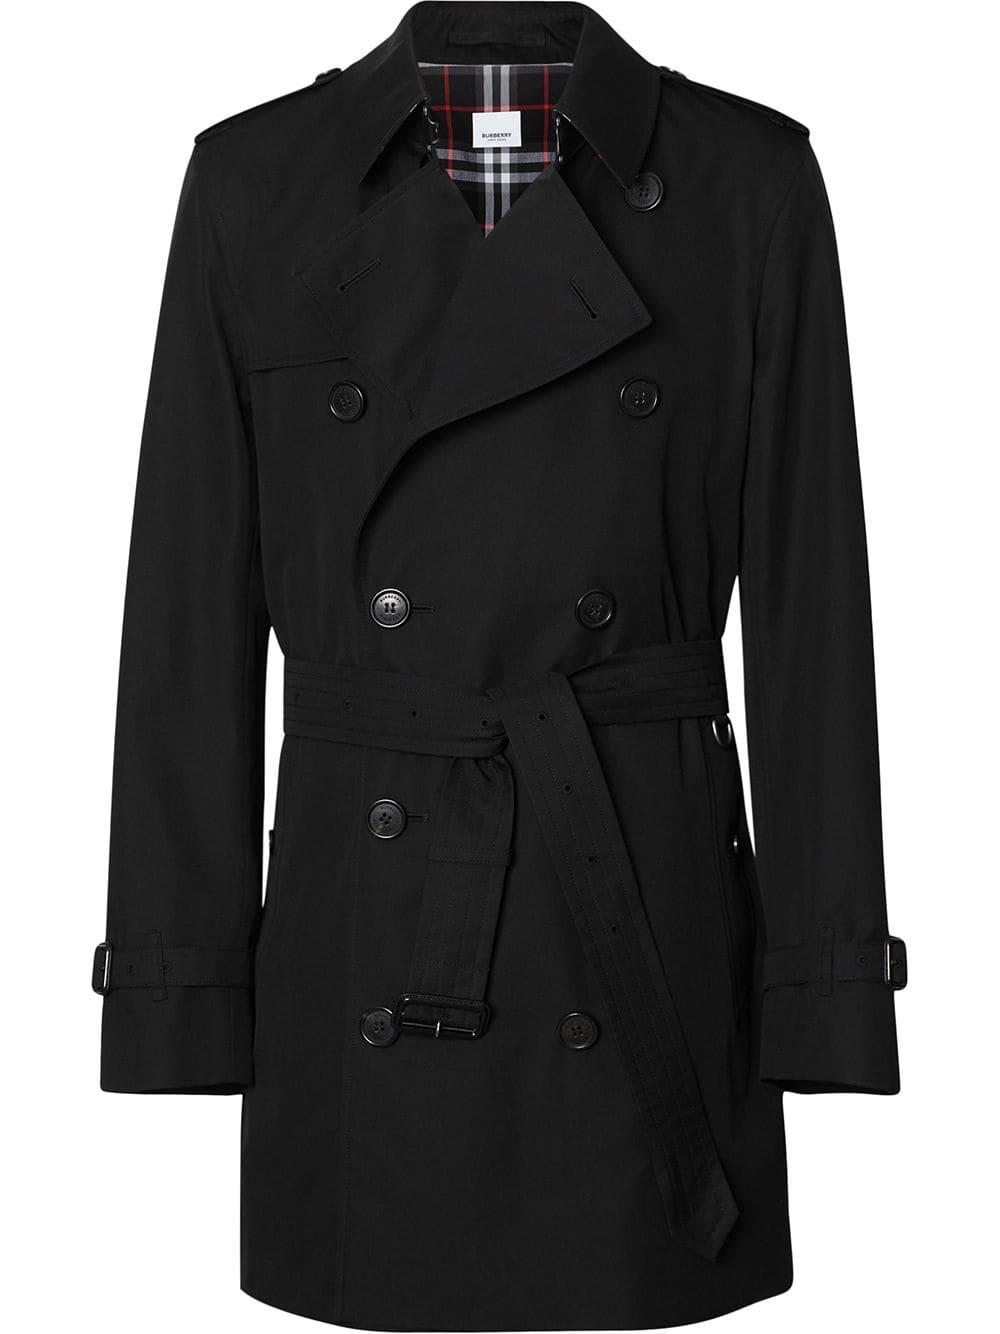 Burberry Cotton Gabardine Trench Coat in Black for Men - Save 25% - Lyst